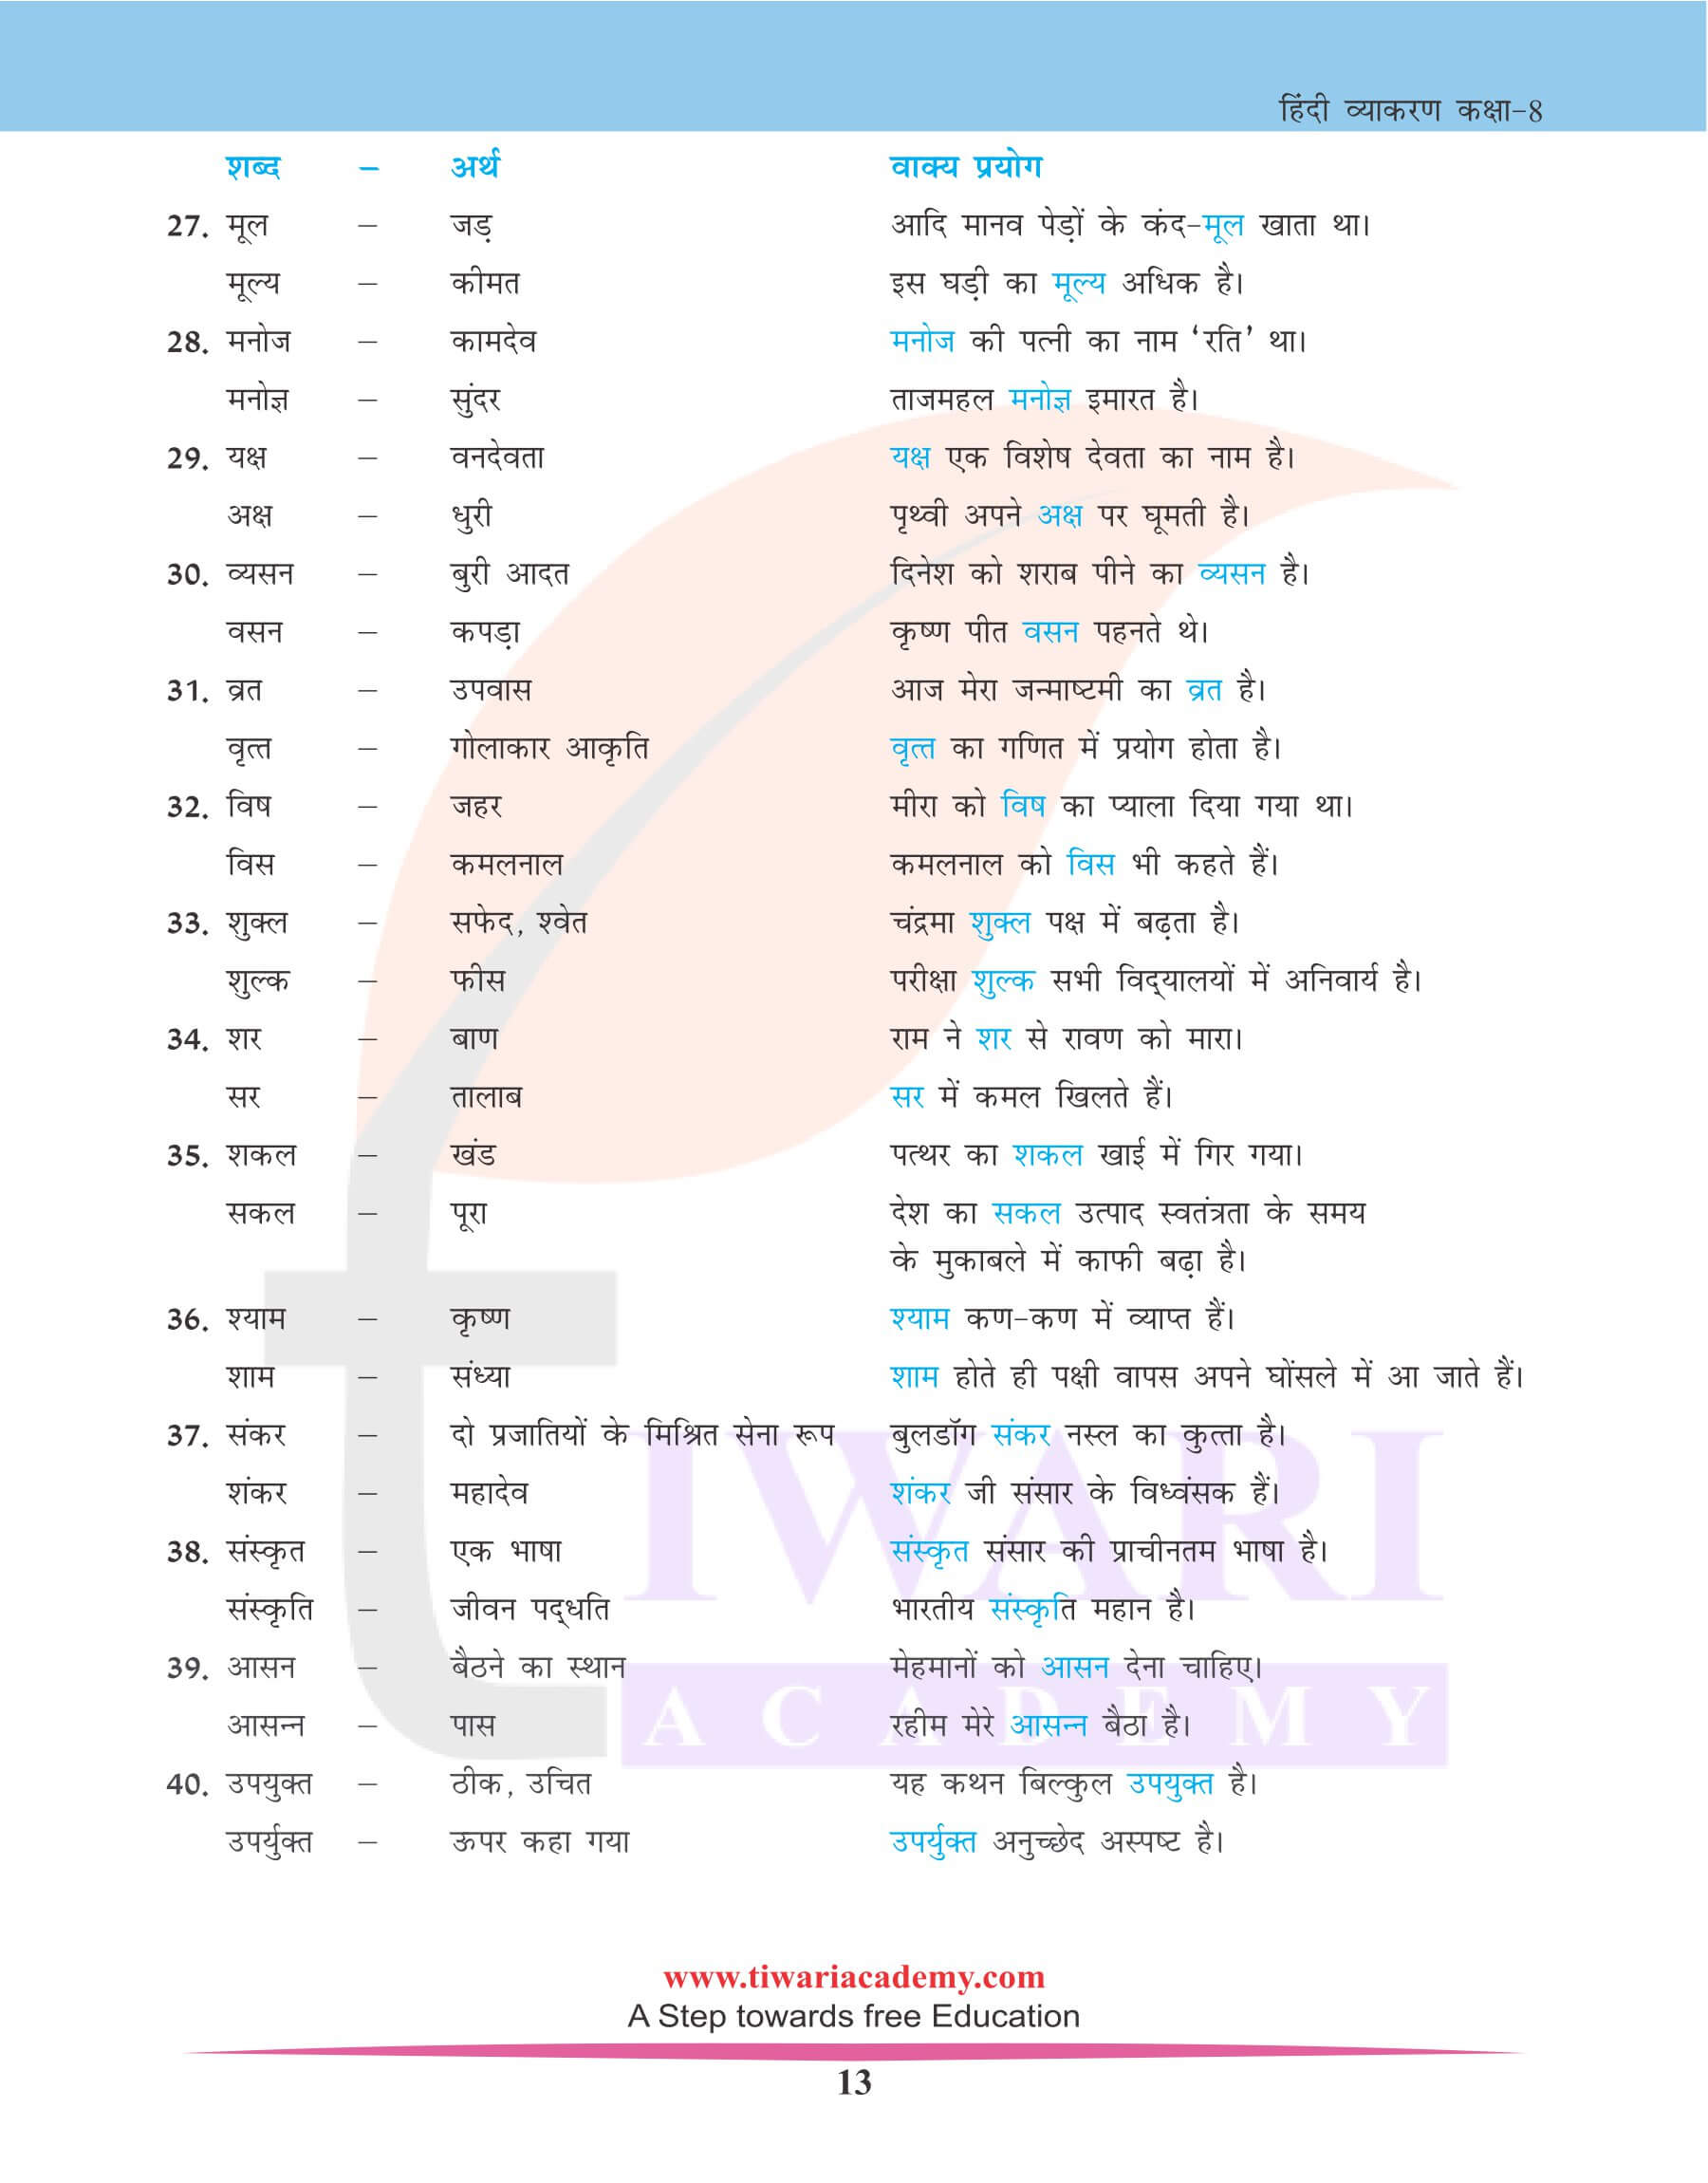 कक्षा 8 हिंदी व्याकरण में भिन्नार्थक शब्द अभ्यास